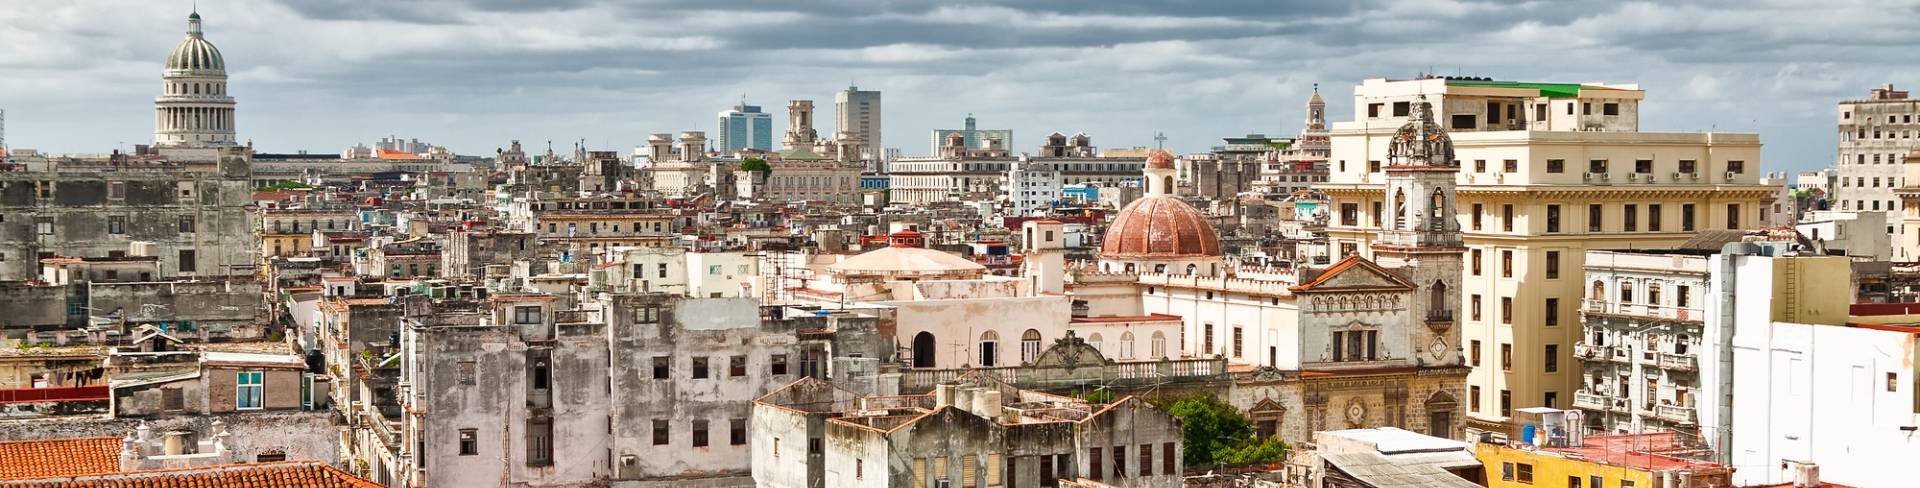 Гавана - столица Кубы